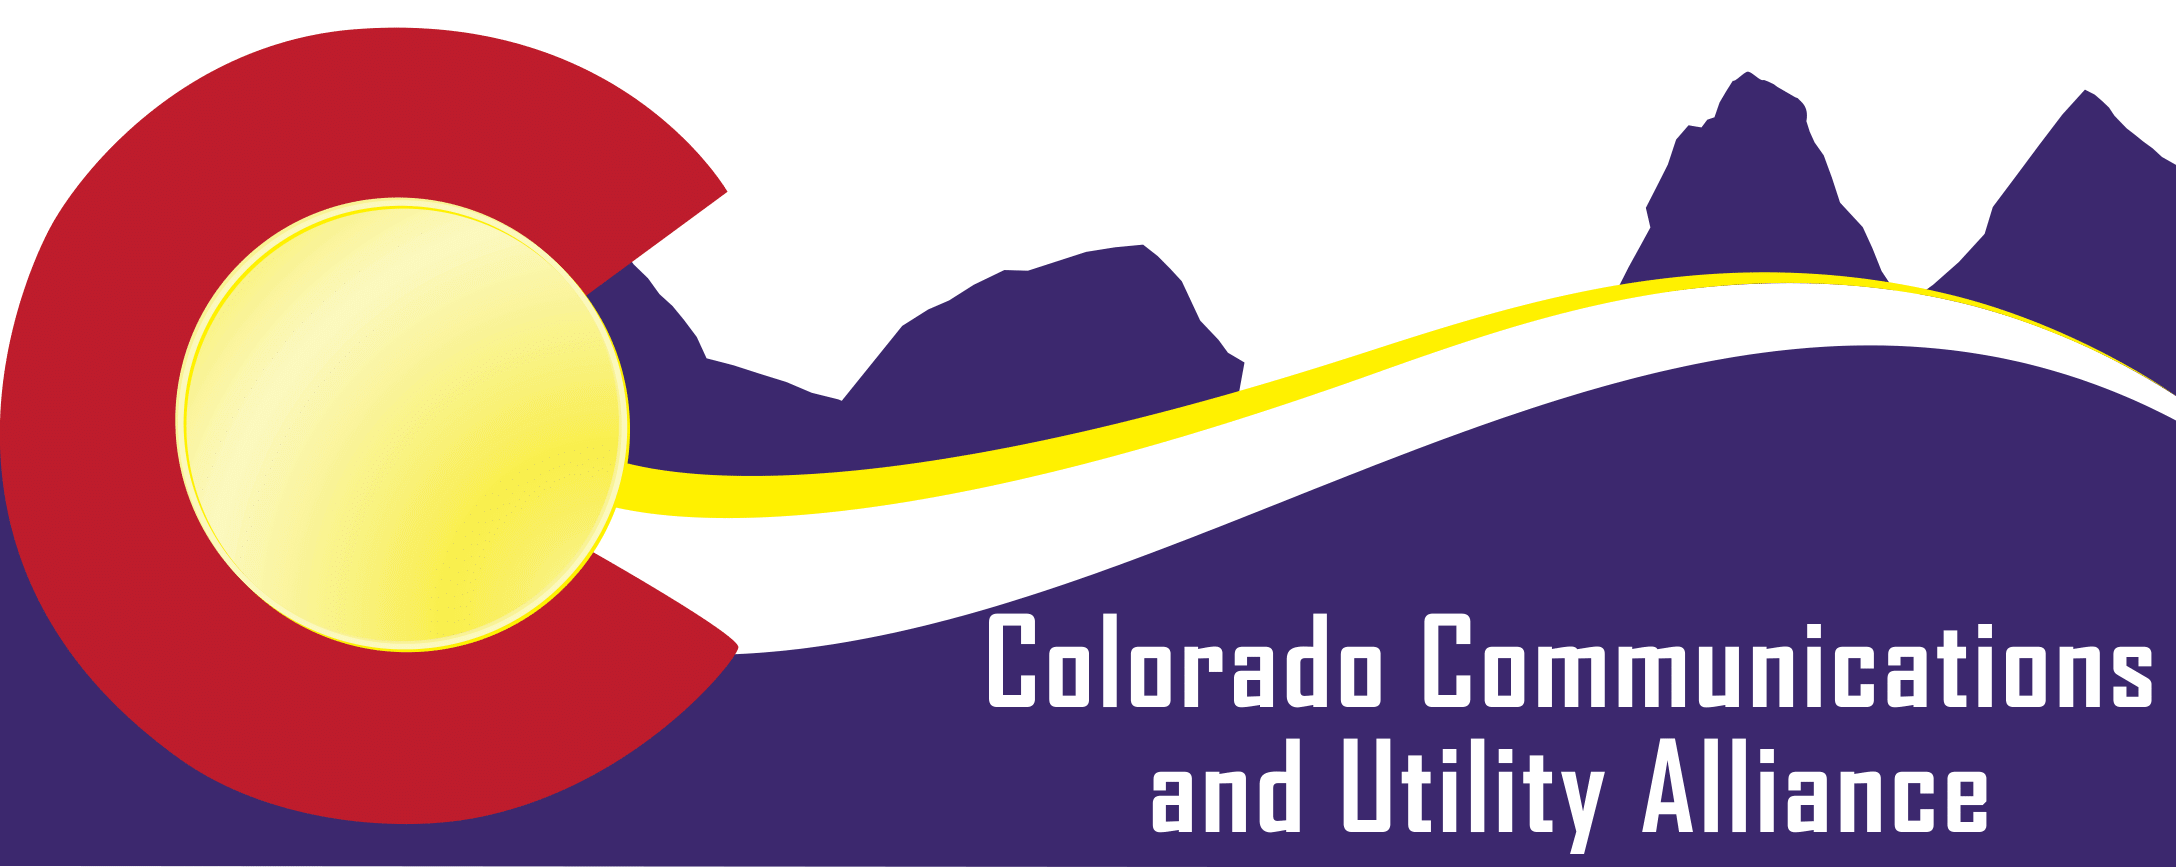 Colorado Communications and Utility Alliance Logo